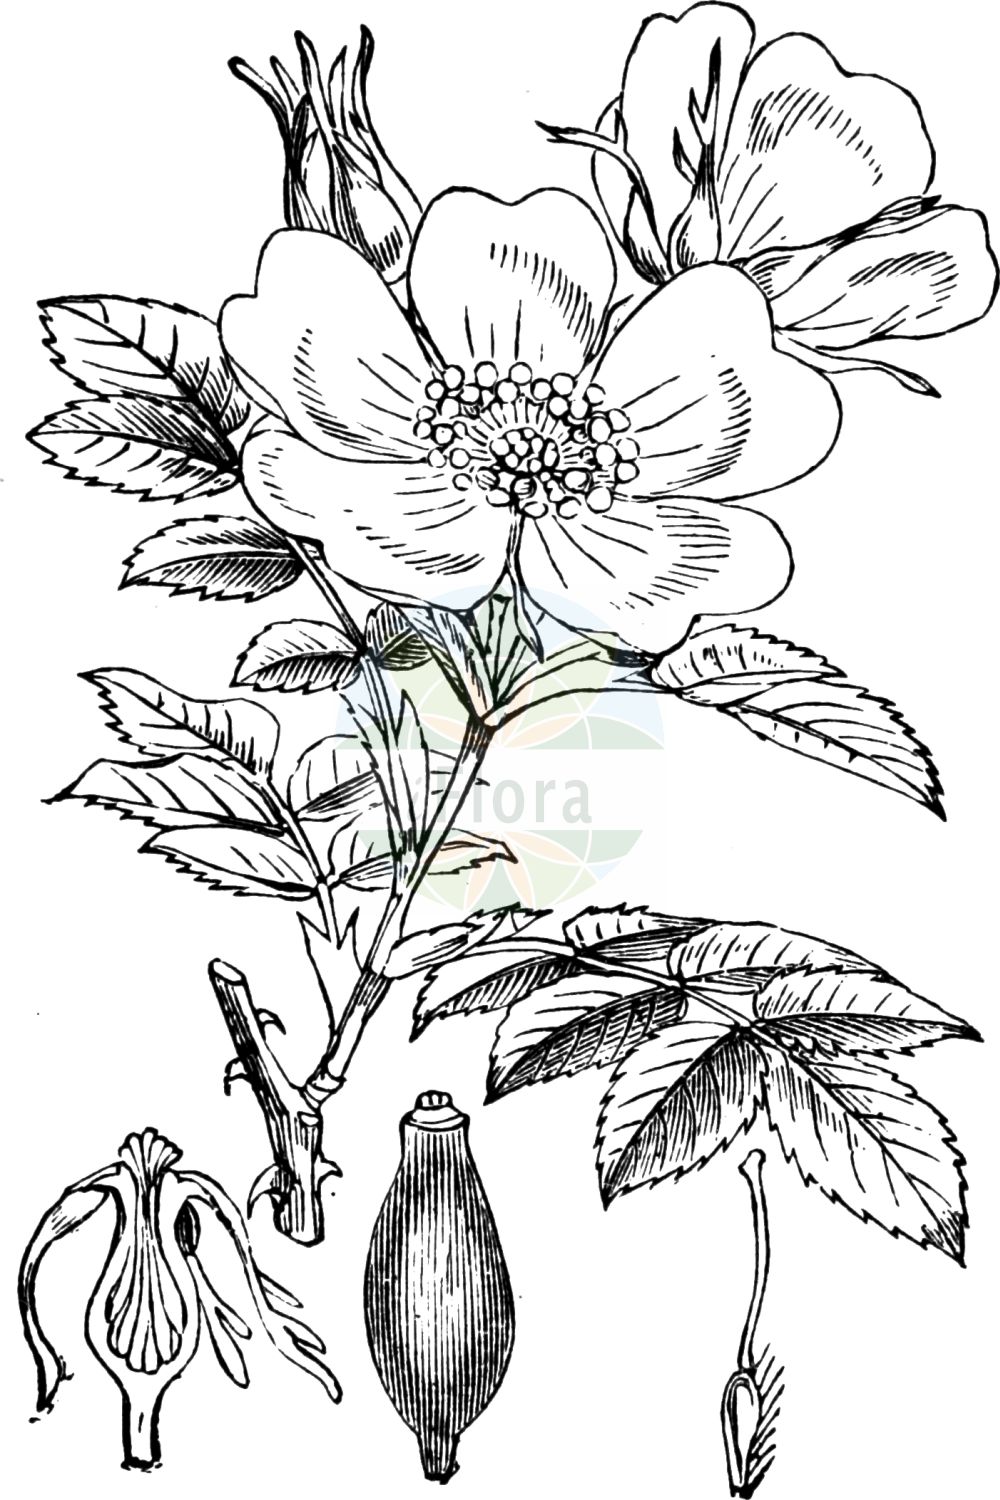 Historische Abbildung von Rosa canina (Hundsrose - Dog-rose). Das Bild zeigt Blatt, Bluete, Frucht und Same. ---- Historical Drawing of Rosa canina (Hundsrose - Dog-rose). The image is showing leaf, flower, fruit and seed.(Rosa canina,Hundsrose,Dog-rose,Crepinia aciphylla,Crepinia andegavensis,Crepinia canina,Crepinia psilophylla,Crepinia squarrosa,Rosa achburensis,Rosa aciphylla,Rosa actinodroma,Rosa adenocalyx,Rosa adscita,Rosa afzeliana,Rosa agraria,Rosa albolutescens,Rosa amansii,Rosa ambigua,Rosa analoga,Rosa andegavensis,Rosa arguta,Rosa armata,Rosa armoricana,Rosa aspernata,Rosa aspratilis,Rosa belgradensis,Rosa biebersteiniana,Rosa blondeauana,Rosa bujedana,Rosa calvatostyla,Rosa calycina,Rosa cariotii,Rosa catalaunica,Rosa caucasea,Rosa caucasica,Rosa chaboissaei,Rosa ciliatosepala,Rosa cladoleia,Rosa condensata,Rosa controversa,Rosa curticola,Rosa desvauxii,Rosa didoensis,Rosa dilucida,Rosa disparilis,Rosa dollineriana,Rosa dolosa,Rosa dumosa,Rosa edita,Rosa eriostyla,Rosa exilis,Rosa fallax,Rosa fallens,Rosa firma,Rosa firmula,Rosa fissispina,Rosa flavidifolia,Rosa flexibilis,Rosa fraxinoides,Rosa frivaldskyi,Rosa frondosa,Rosa generalis,Rosa glaberrima,Rosa glaucina,Rosa globularis,Rosa haematodes,Rosa hirsuta,Rosa hirtella,Rosa horridula,Rosa inconspicua,Rosa intercedens,Rosa laxifolia,Rosa leiostyla,Rosa lemaitrei,Rosa litigiosa,Rosa lonaczevskii,Rosa longituba,Rosa ludibunda,Rosa lutetiana,Rosa macroacantha,Rosa macrostylis,Rosa maeotica,Rosa mandonii,Rosa marisensis,Rosa mediata,Rosa medioxima,Rosa mollardiana,Rosa montivaga,Rosa mucronulata,Rosa myrtilloides,Rosa nemophila,Rosa nervulosa,Rosa nitens,Rosa novella,Rosa oblonga,Rosa oblongata,Rosa occulta,Rosa oenensis,Rosa ololeia,Rosa oreades,Rosa penchinatii,Rosa polyodon,Rosa porrectidens,Rosa praeterita,Rosa pratincola,Rosa prutensis,Rosa psilophylla,Rosa pubens,Rosa ramosissima,Rosa raui,Rosa reboudiana,Rosa retusa,Rosa rorida,Rosa rougeonensis,Rosa rubelliflora,Rosa rubescens,Rosa sarmentacea,Rosa saxatilis,Rosa sazilliacensis,Rosa scabrata,Rosa semiglandulosa,Rosa senticosa,Rosa separabilis,Rosa sepium,Rosa seposita,Rosa simplicidens,Rosa slobodjanii,Rosa sosnowskyi,Rosa sphaerica,Rosa sphaeroidea,Rosa spuria,Rosa squarrosa,Rosa stenocarpa,Rosa stipularis,Rosa subertii,Rosa superba,Rosa sylvularum,Rosa syntrichostyla,Rosa systylomorpha,Rosa timbaliana,Rosa touranginiana,Rosa transsilvanica,Rosa tyraica,Rosa verlotii,Rosa vinacea,Rosa vinealis,Rosa vinetorum,Rosa wettsteinii,Rosa canina,Hundsrose,Anjou-Hunds-Rose,Hunds-Rose,Dog-rose,Briar Rose,Common Briar,Rosa,Rose,Rose,Rosaceae,Rosengewächse,Rose family,Blatt,Bluete,Frucht,Same,leaf,flower,fruit,seed,Fitch et al. (1880))